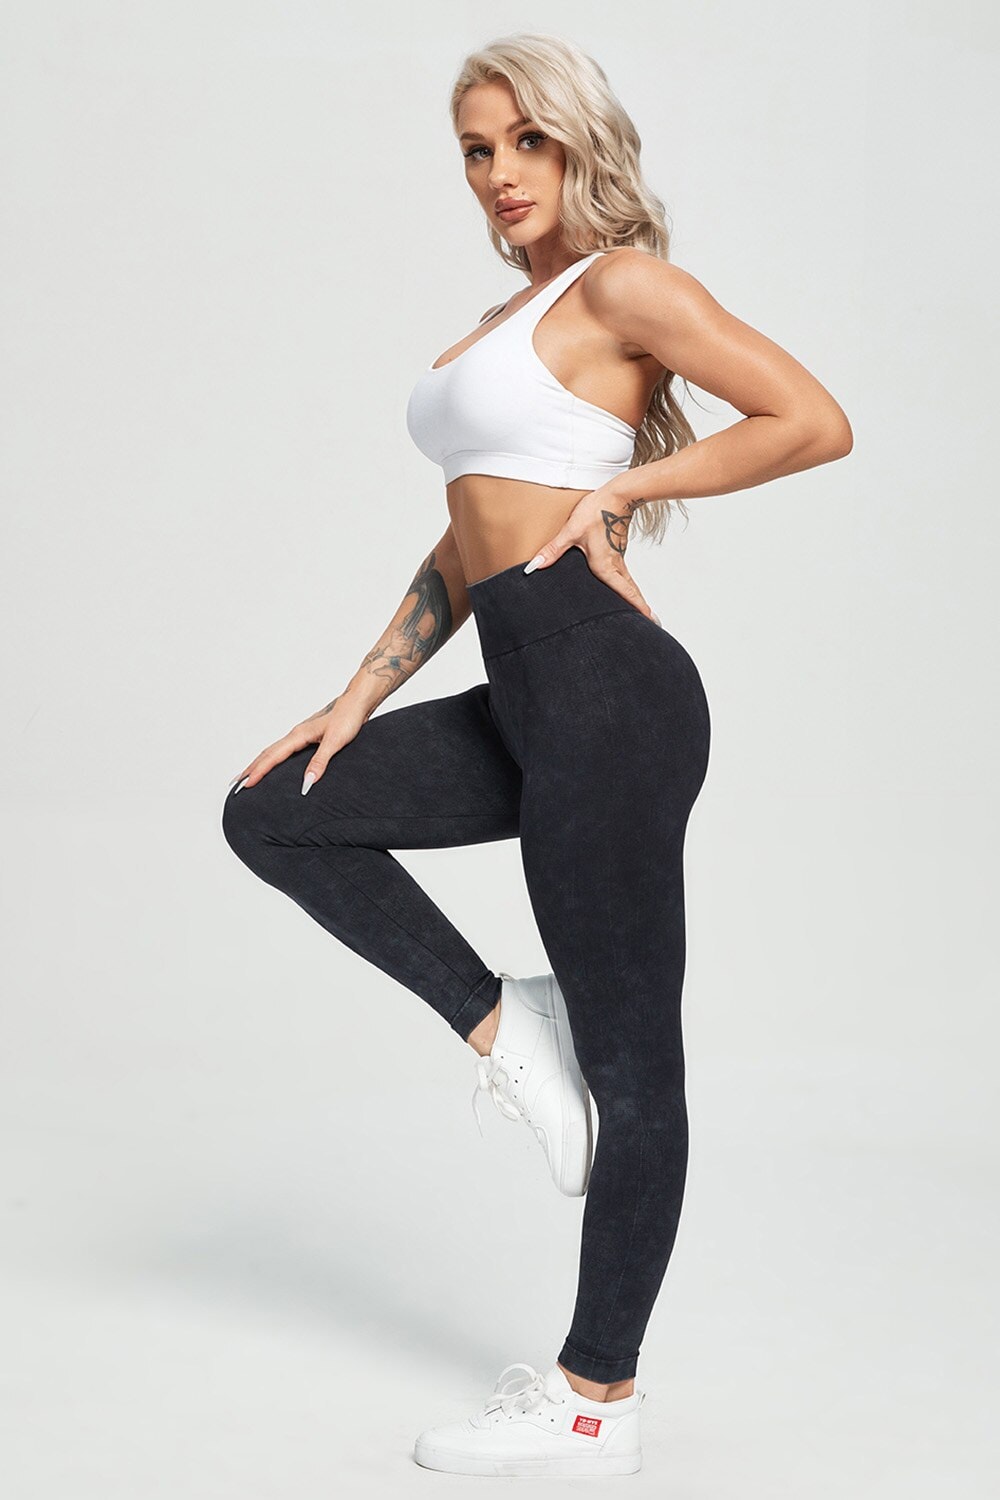 Seamless Leggings Women Fitness Yoga Pants High Waist Gym Workout Tights Stretchy Sports Leggins Push Up Elastic Activewear Pant